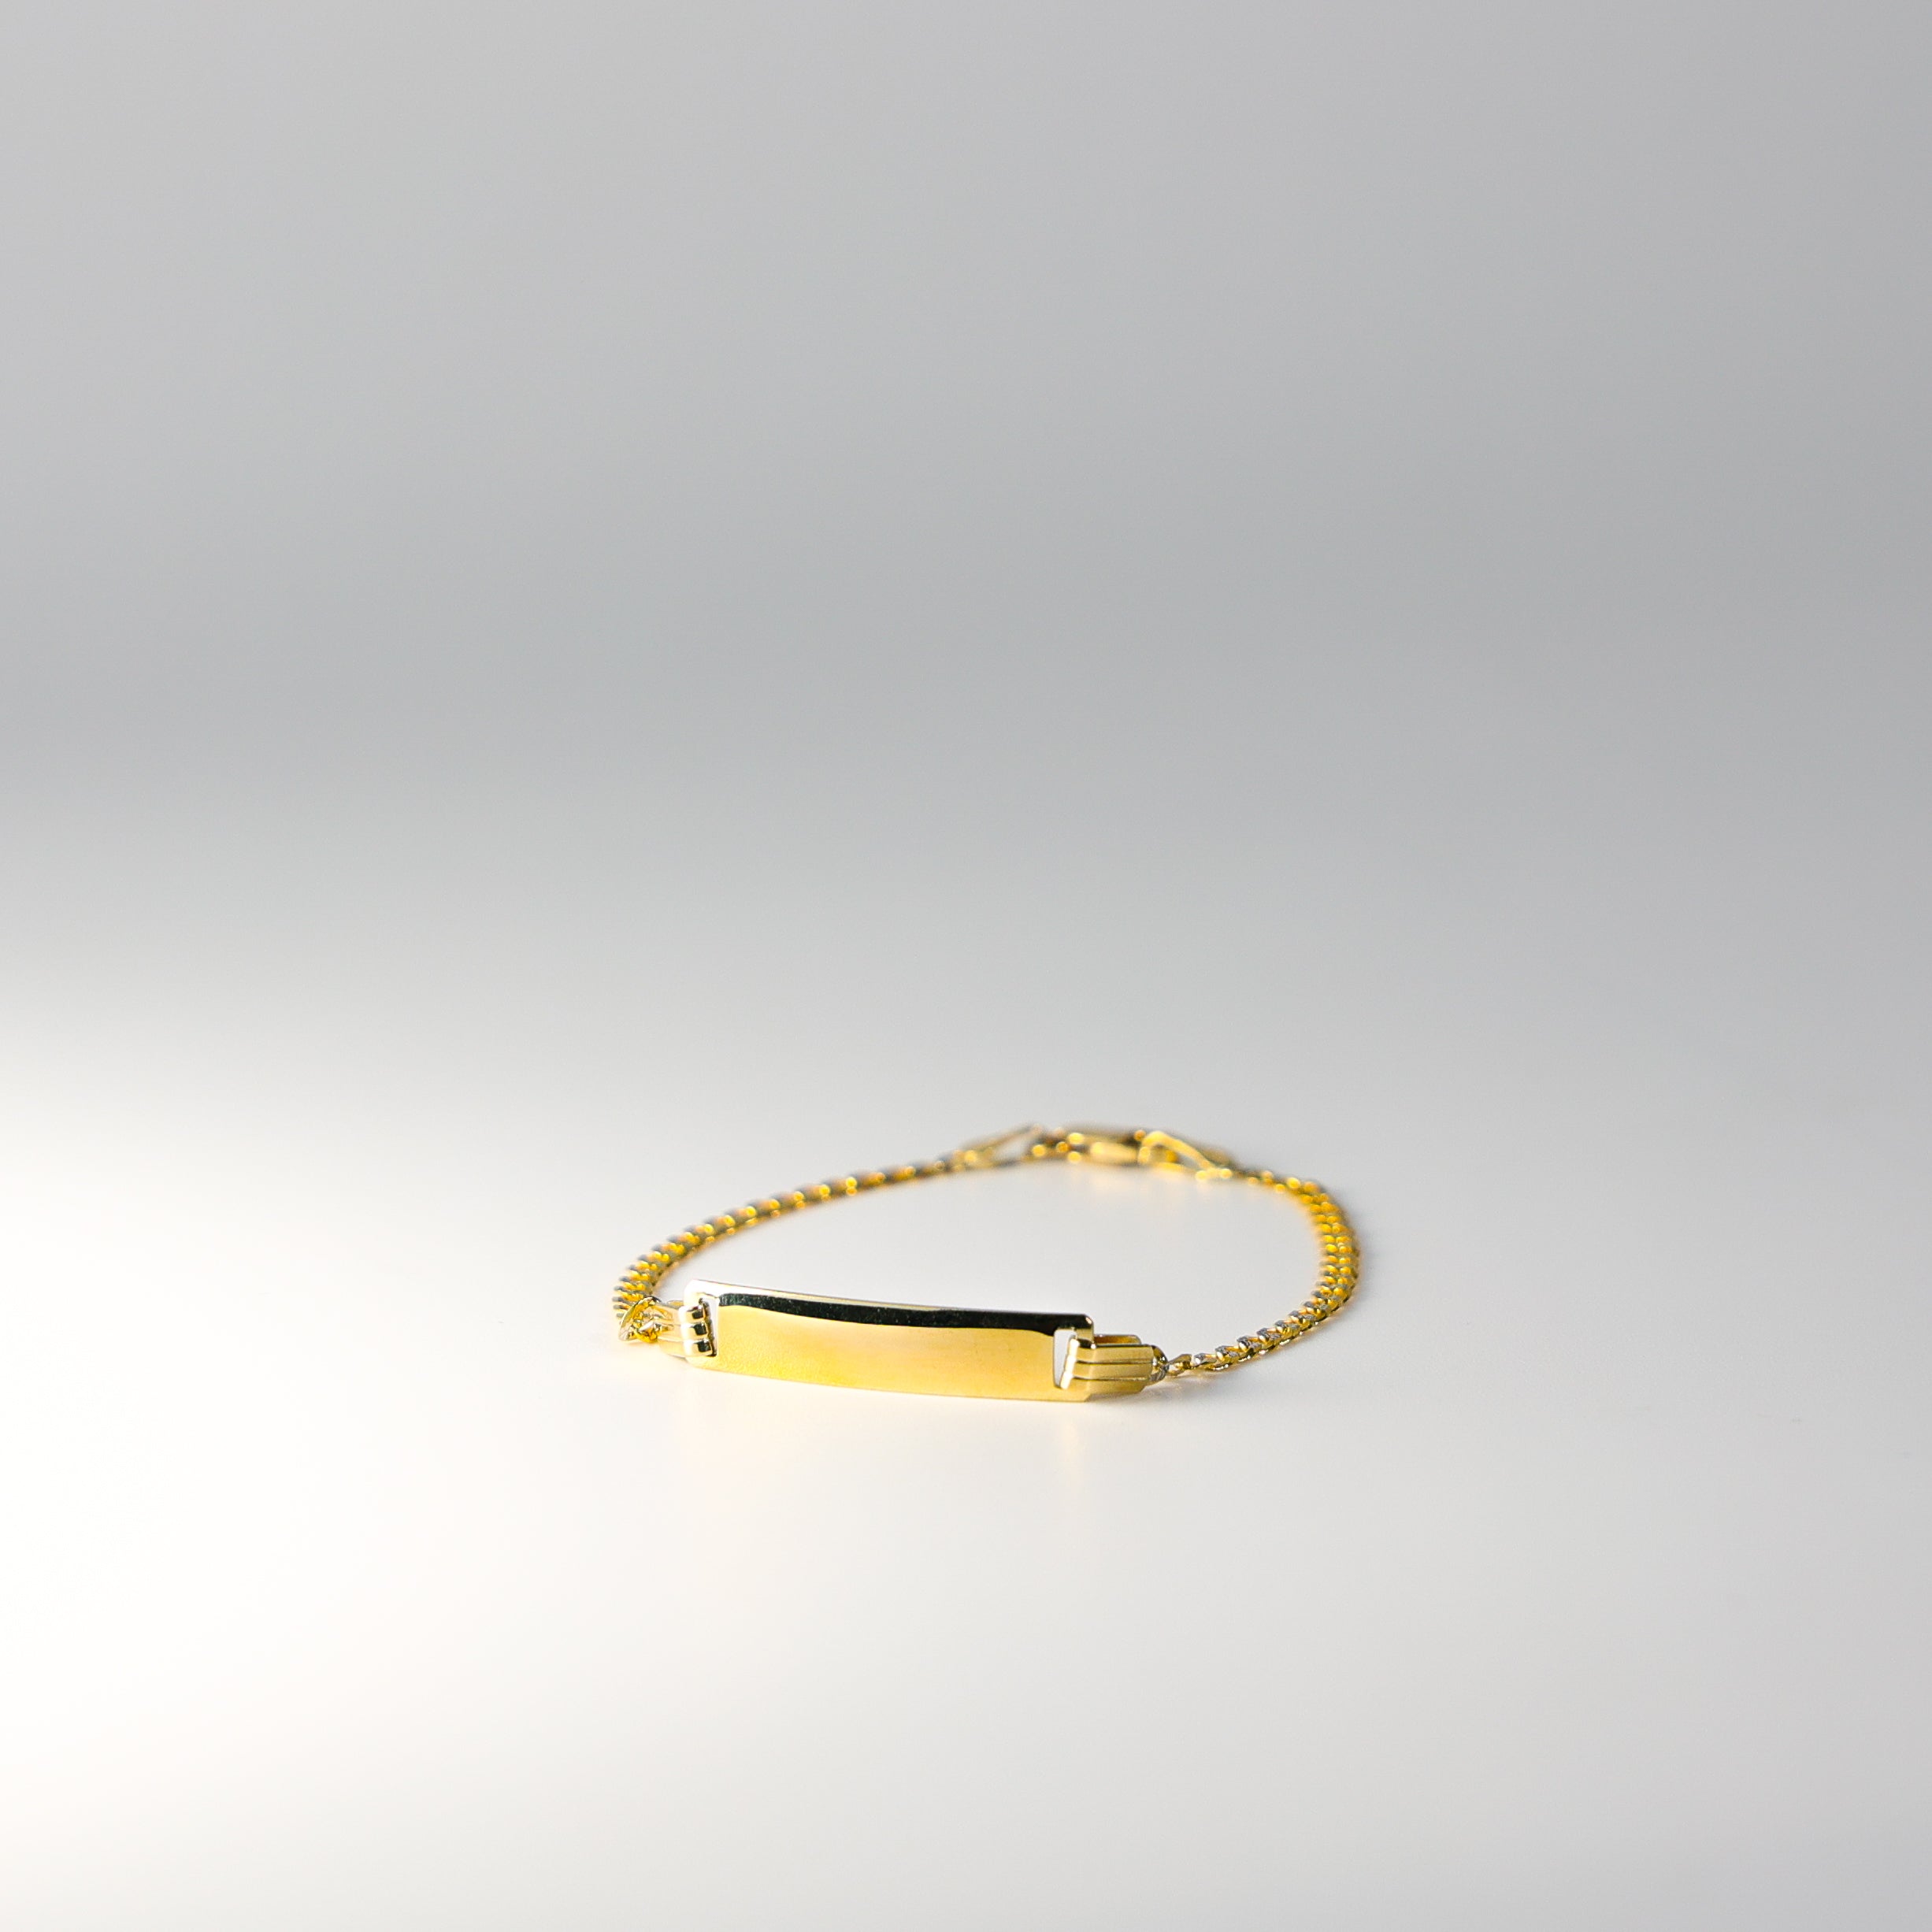 Gold ID Bracelet 2.5MM Cuban Link Chain Diamond Cut Model-AB110 - Charlie & Co. Jewelry